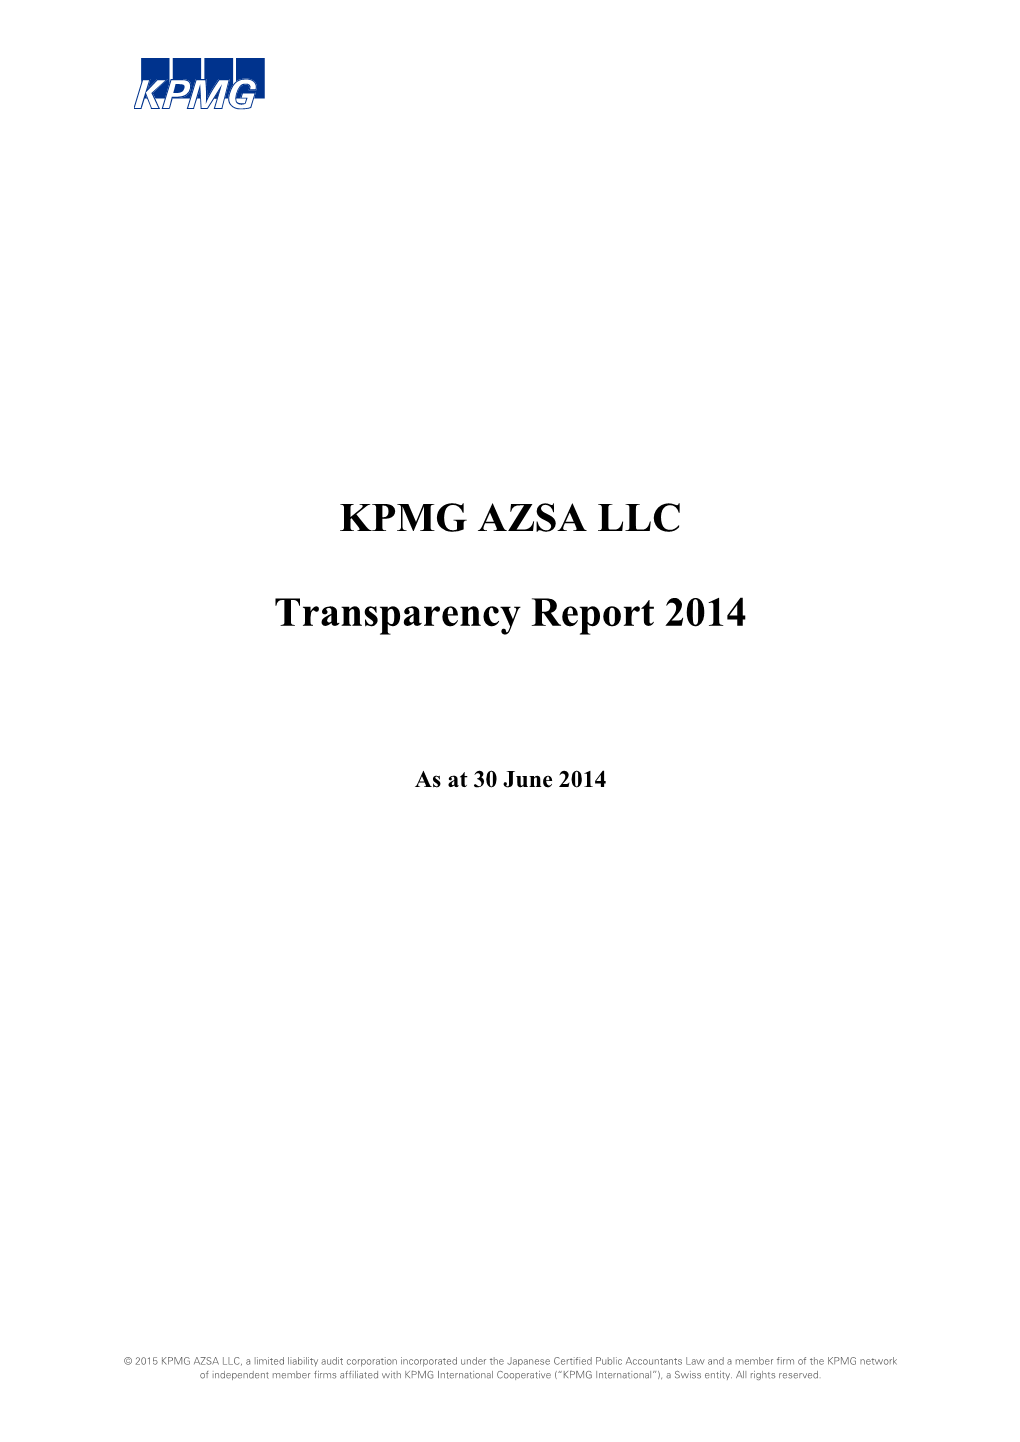 KPMG AZSA LLC Transparency Report 2014